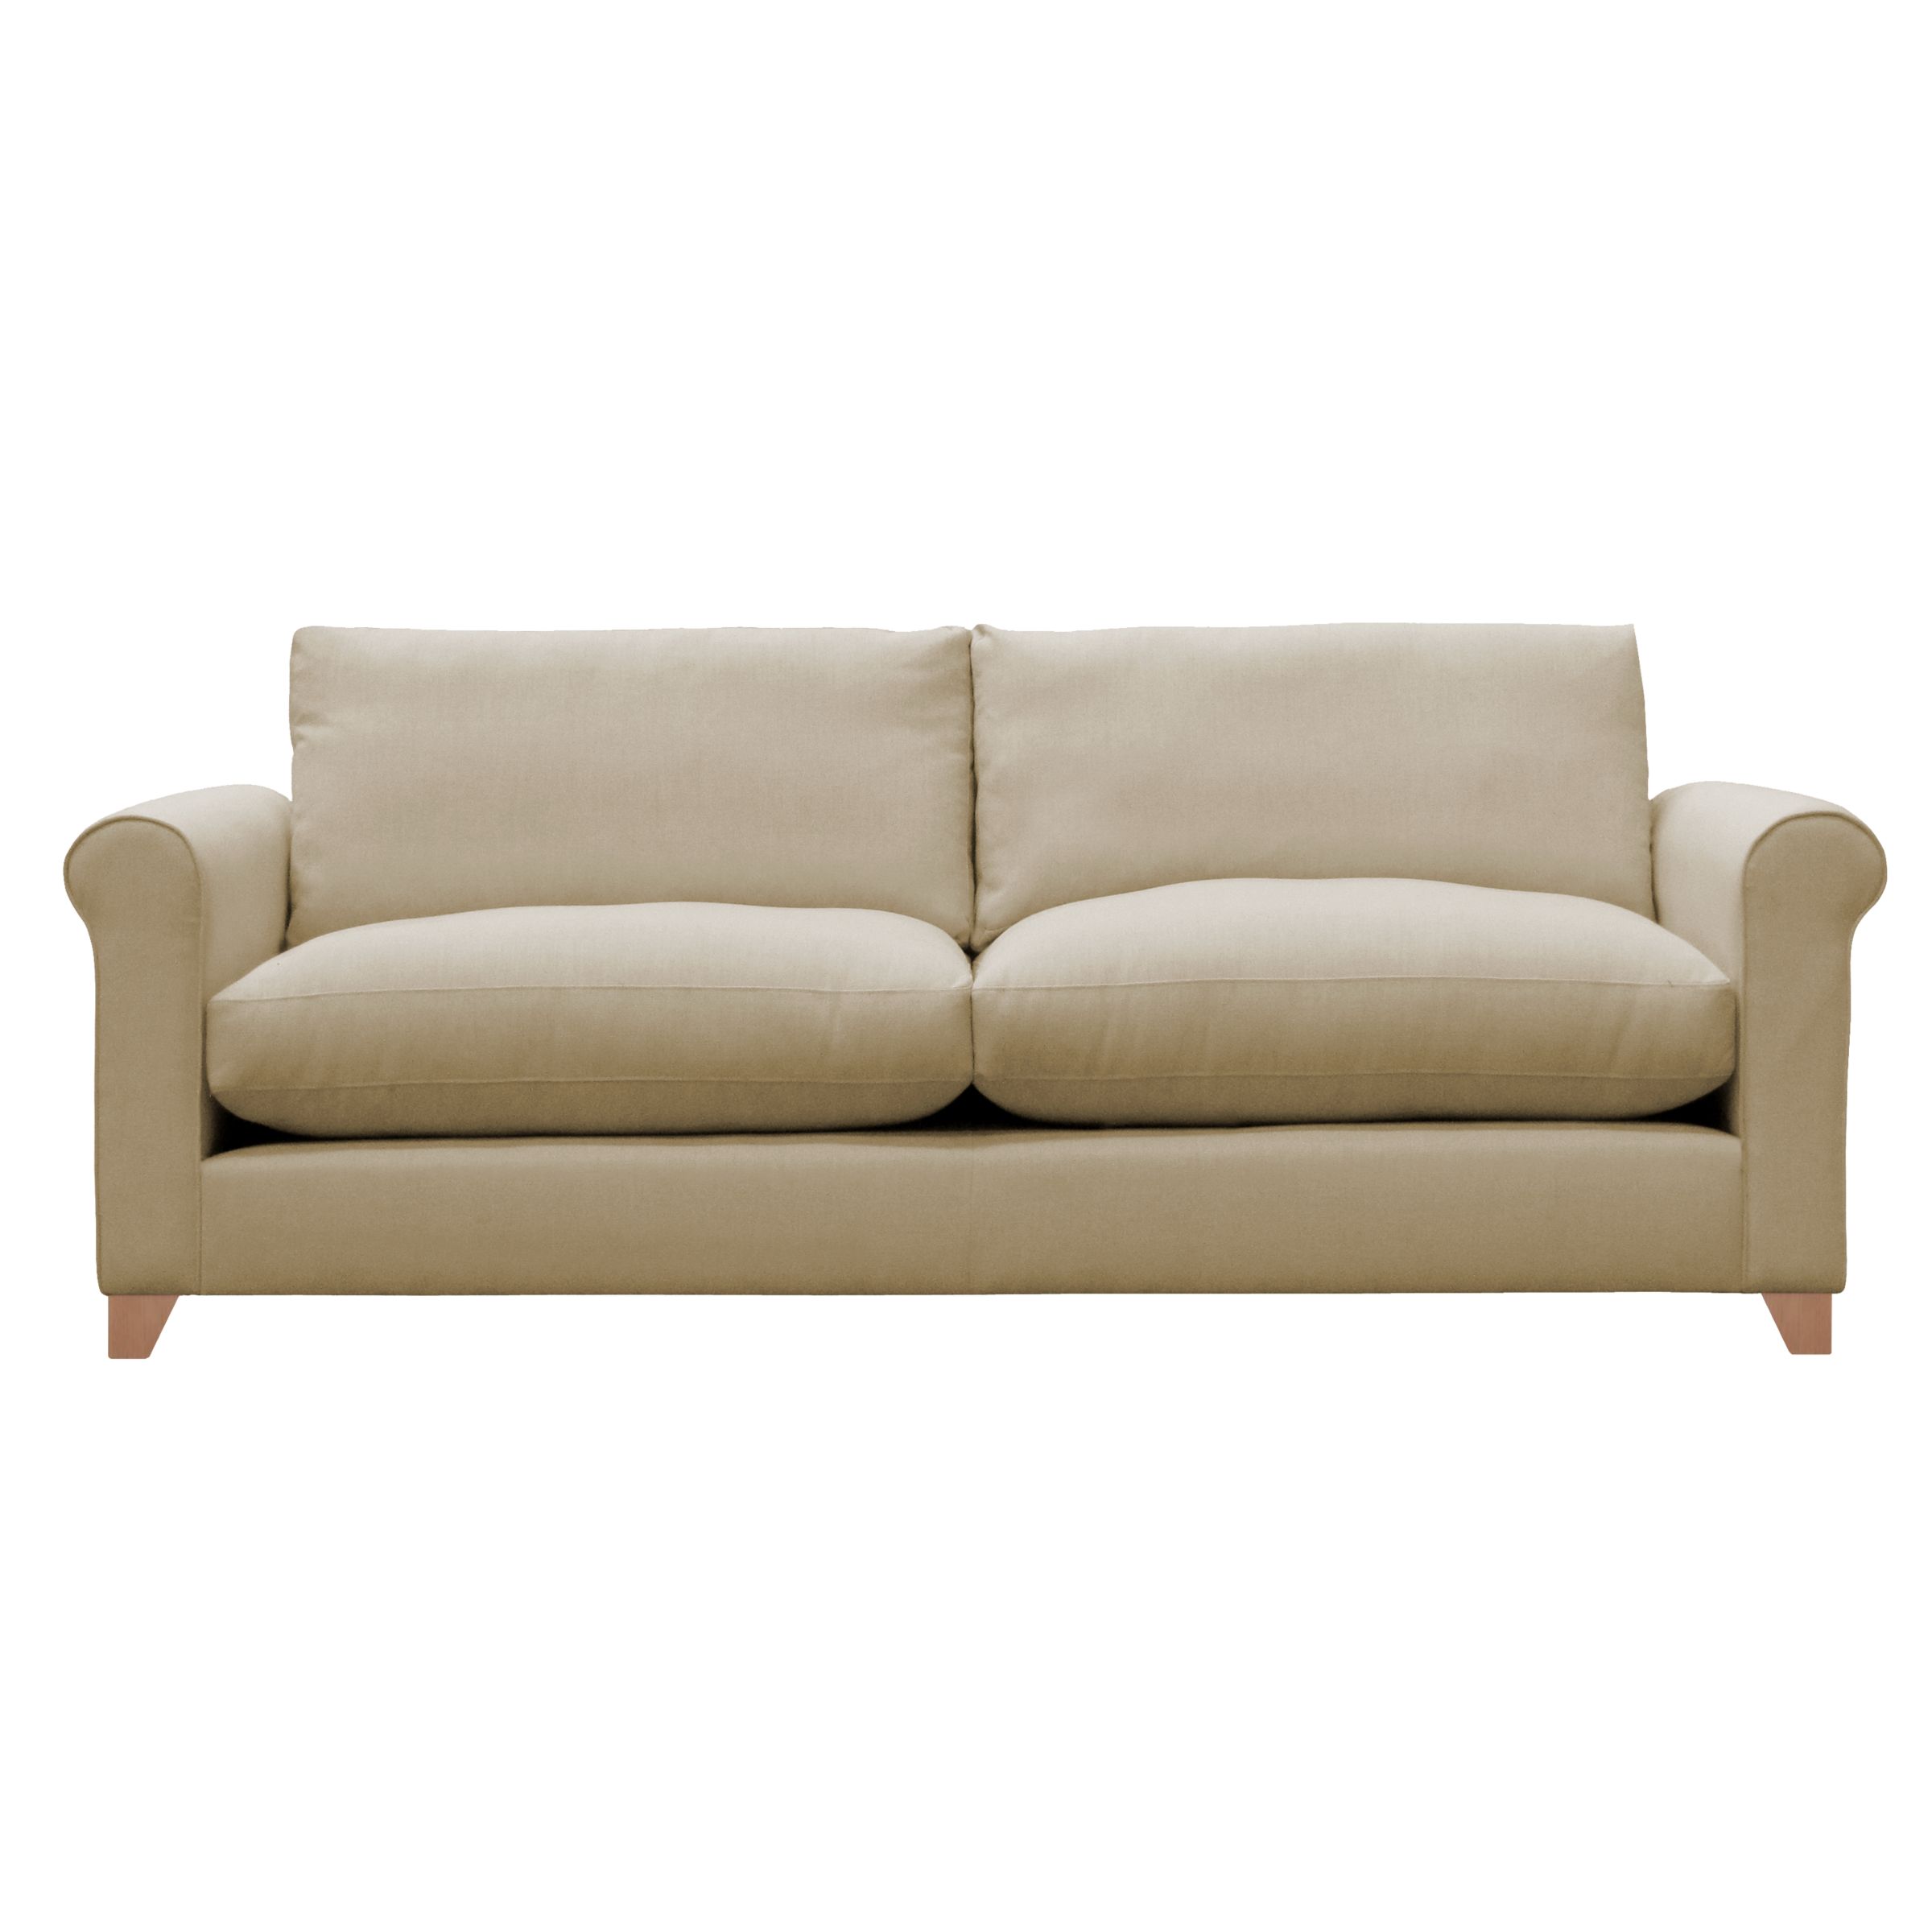 John Lewis Options Scroll Arm Grand Sofa, Eaton Mocha, width 217cm